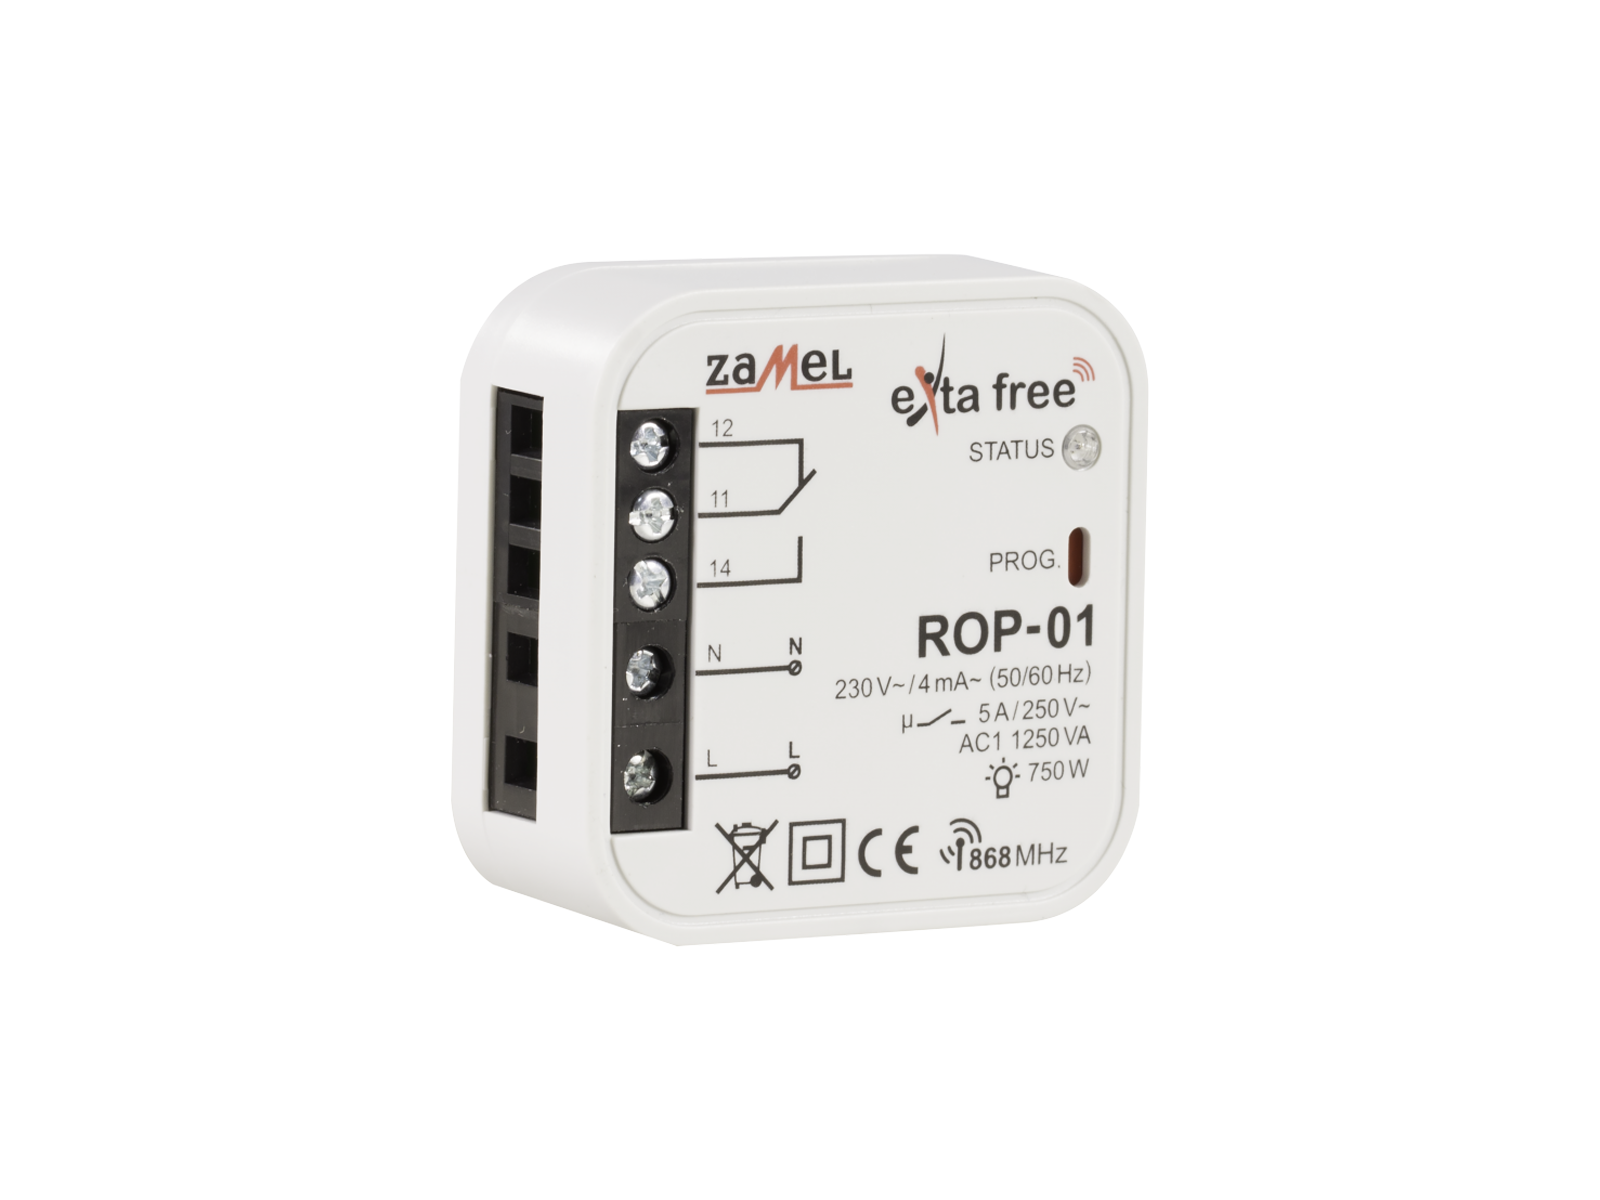 Rádiový přijímač ROP-01 jednokanálový do krabice